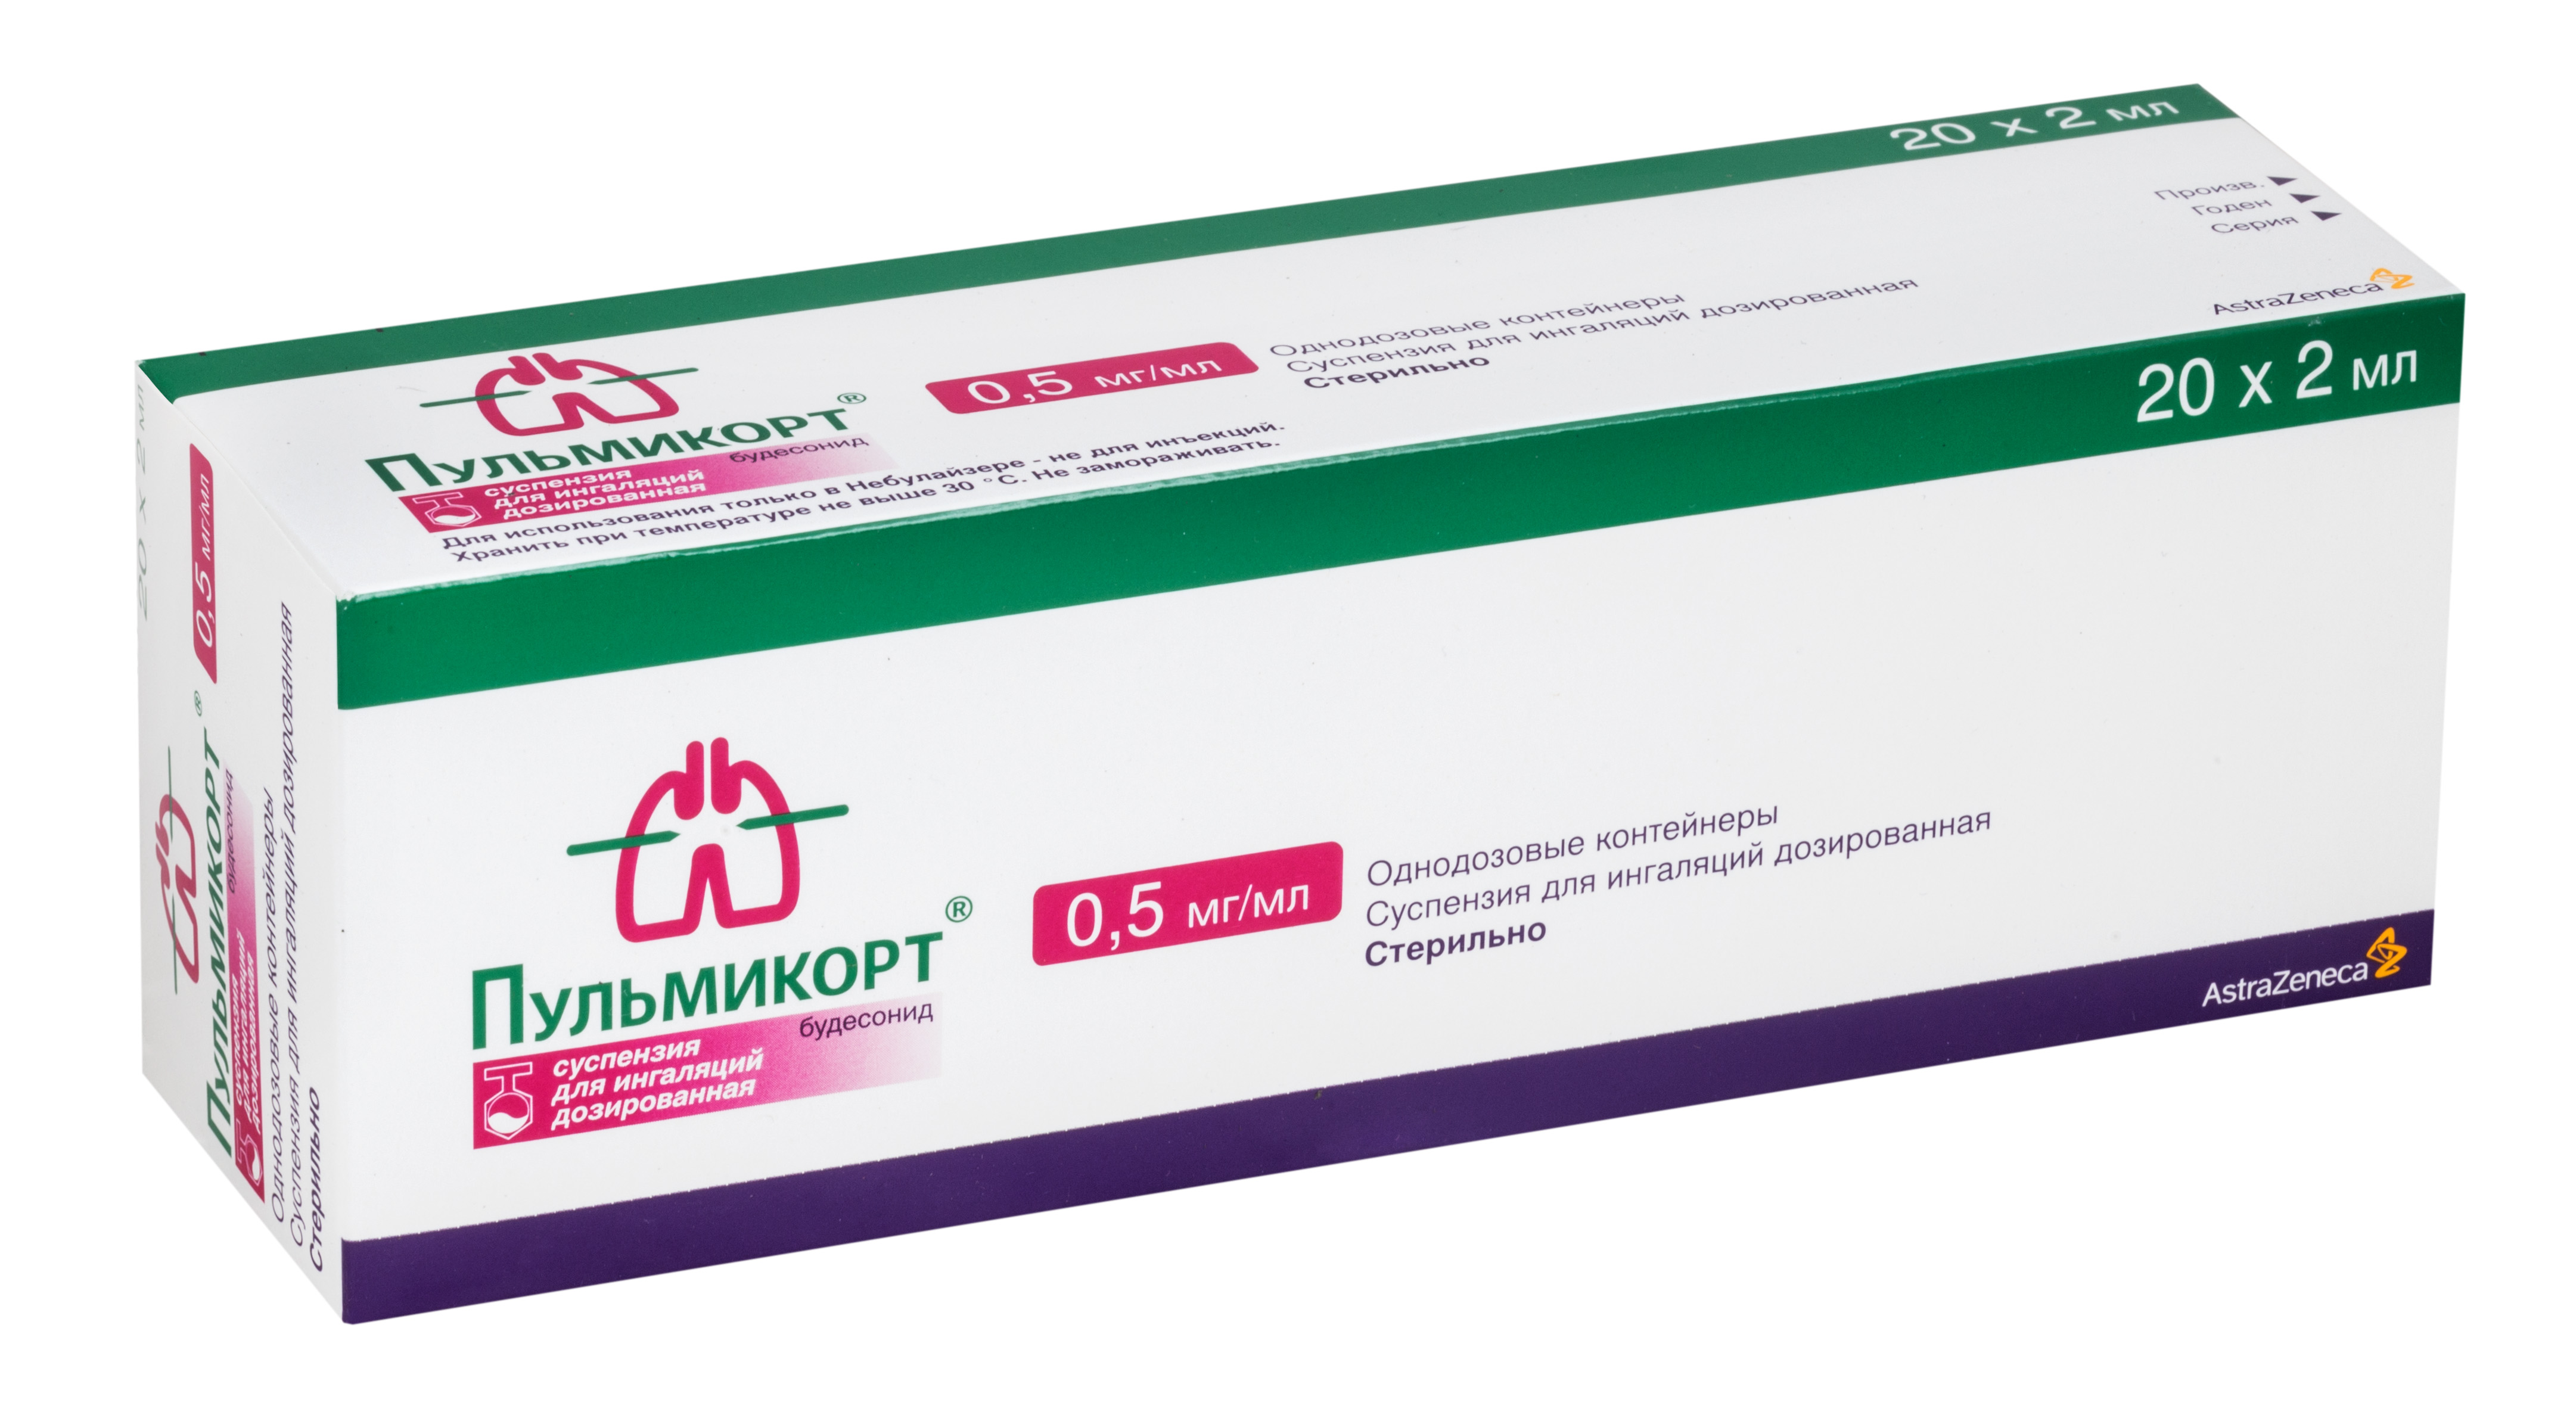 Пульмикорт суспензия для ингаляций 0, 5 мг/мл 20 шт., AstraZeneca AB  - купить со скидкой